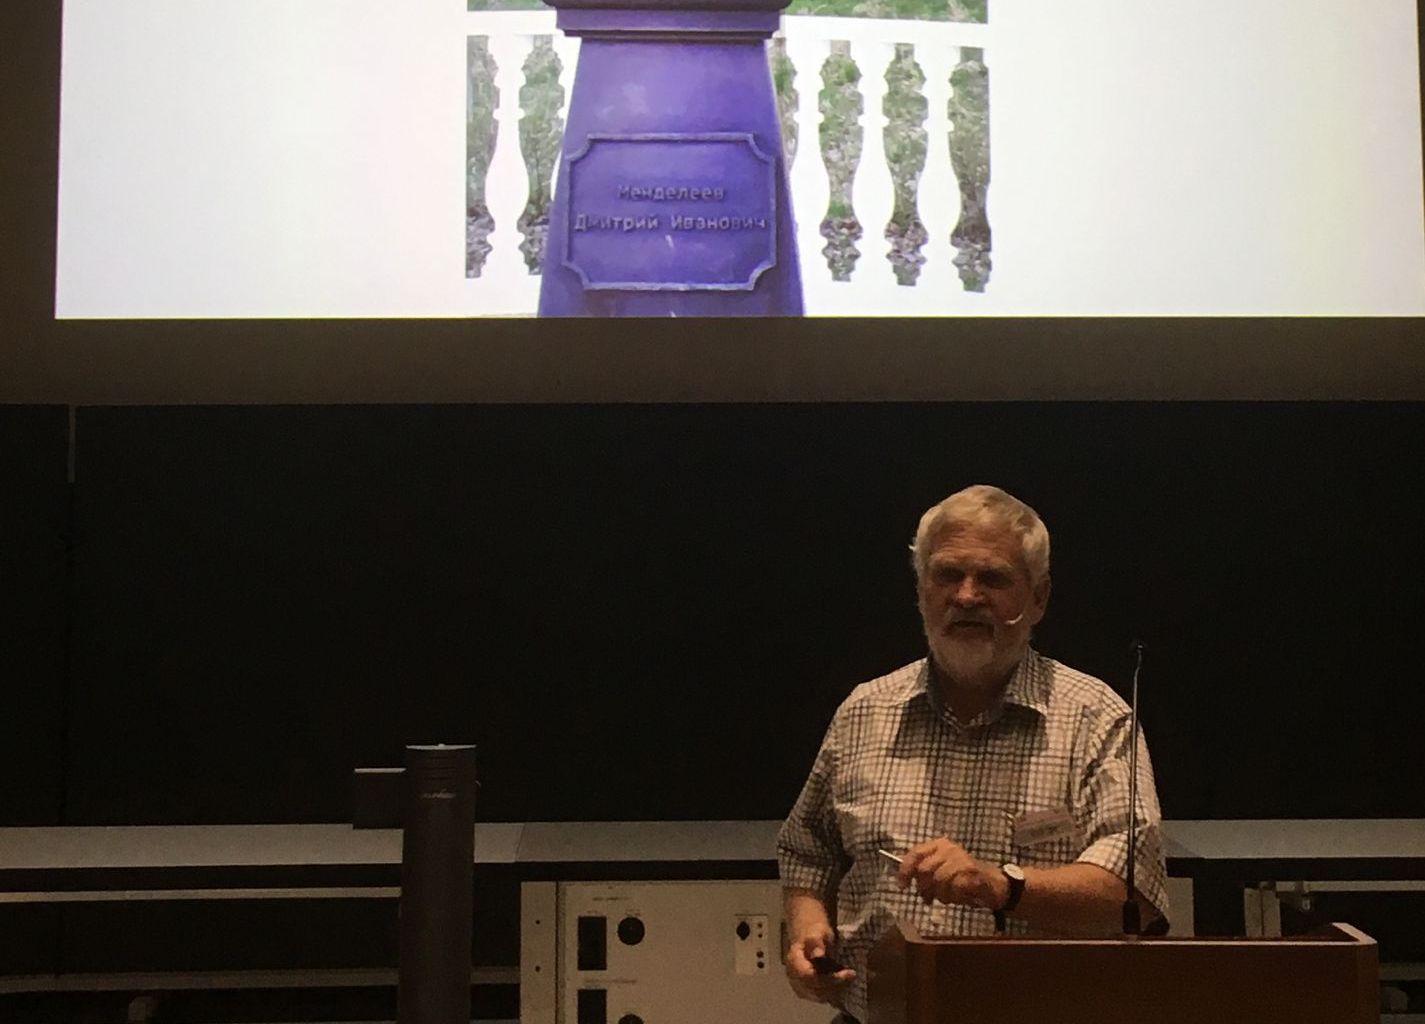 Heinz Gäggeler speaking at the symposium "On the Origin of the Elements" (IYPT 2019)